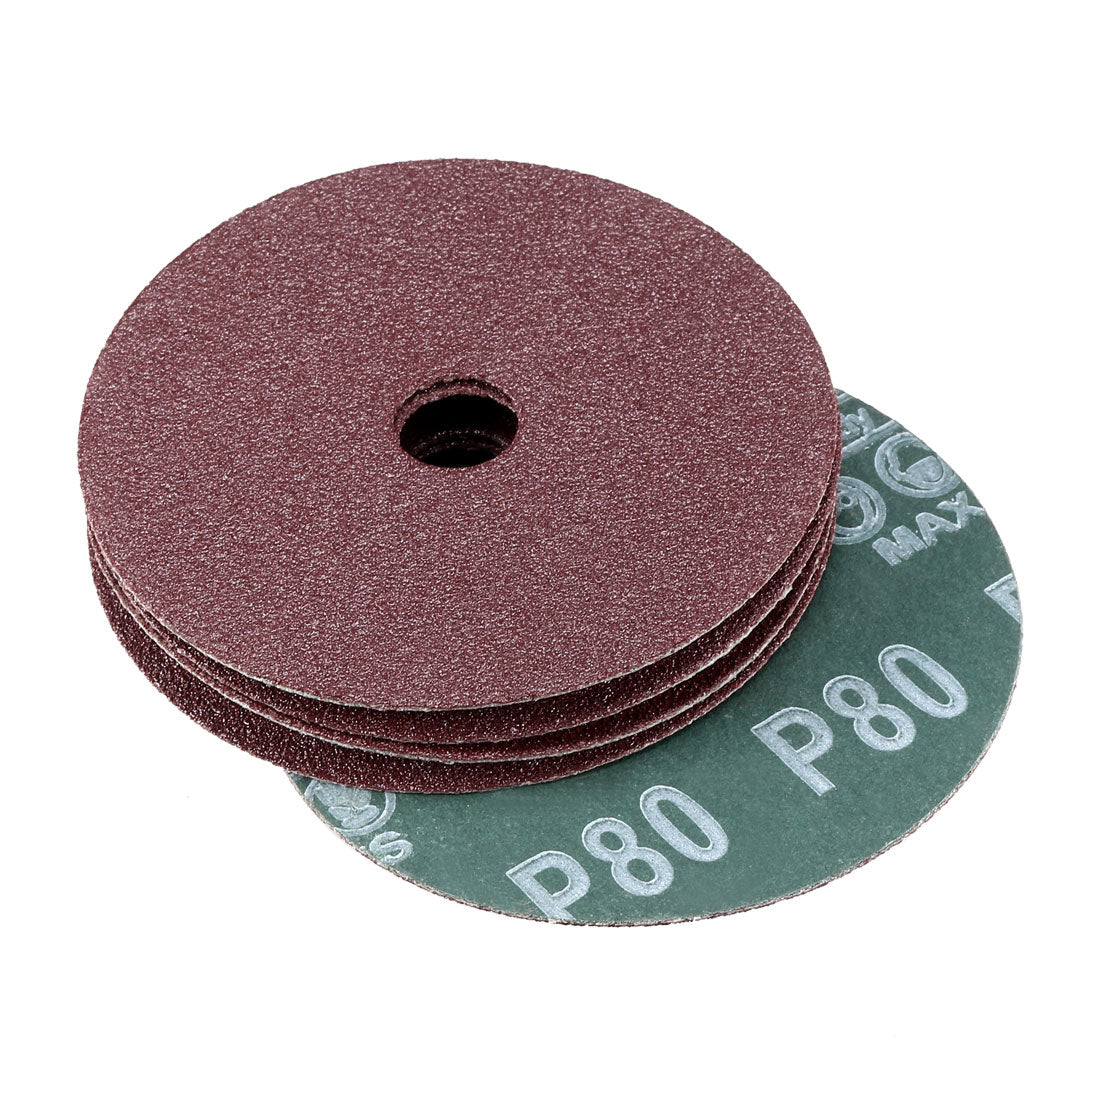 Uxcell Uxcell 4-Inch x 5/8-Inch Aluminum Oxide Resin Fiber Discs, Center Hole 120 Grit Sanding Grinding Discs, 5 Pcs